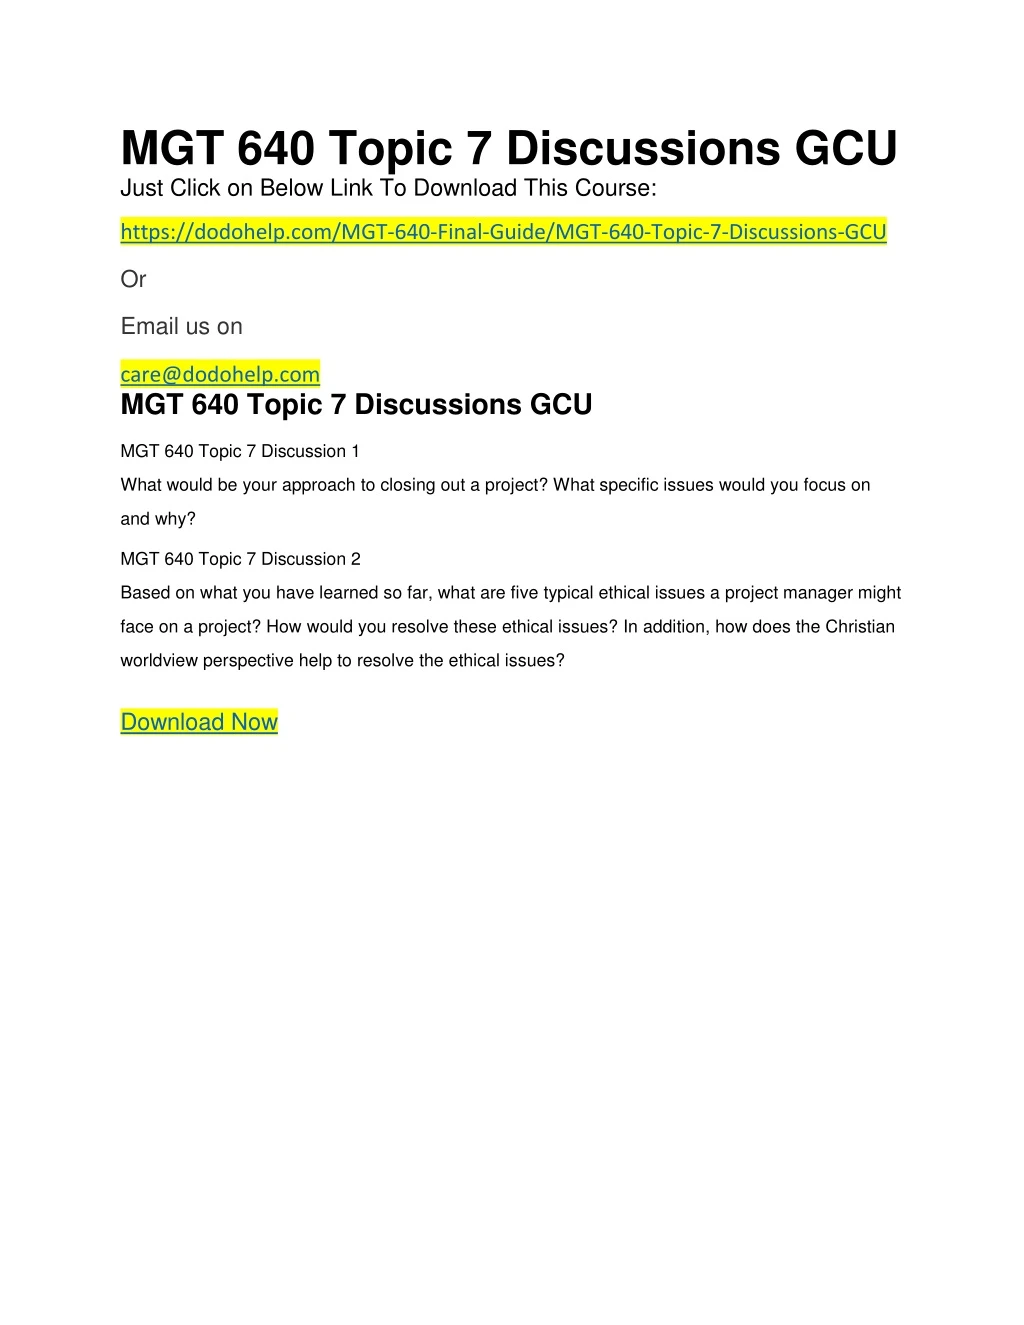 mgt 640 topic 7 discussions gcu just click